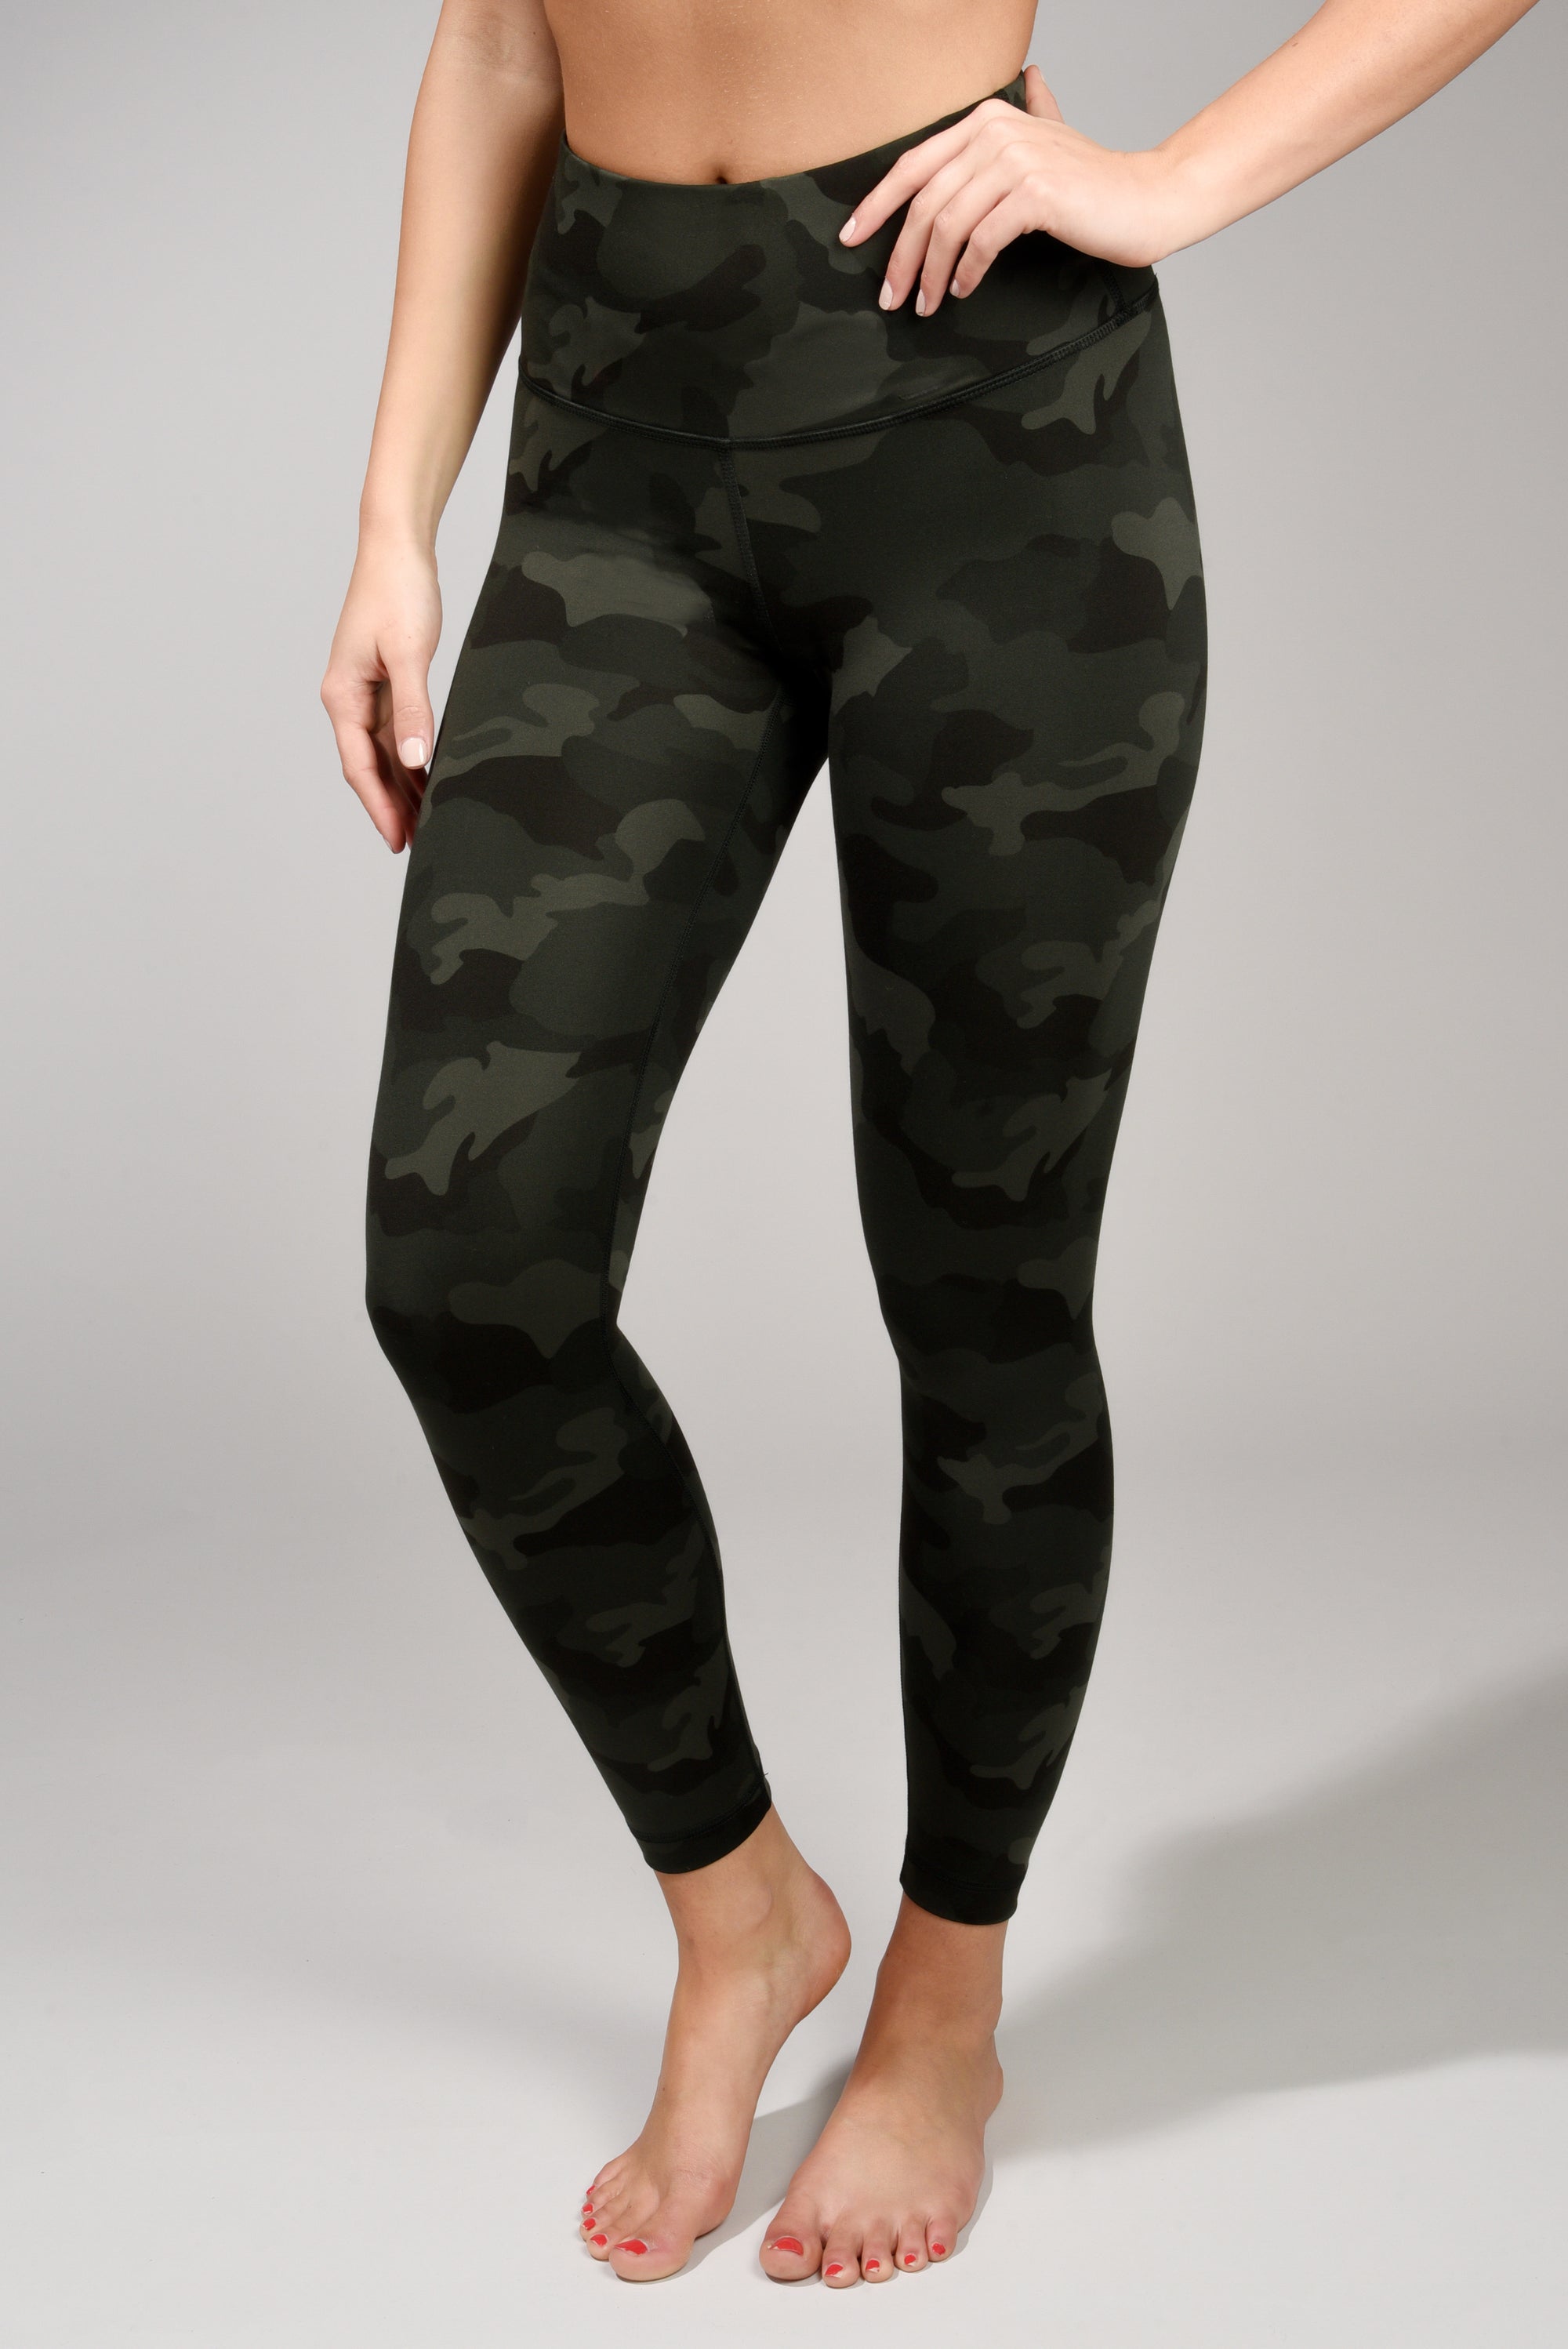 Yogalicious LUX Womens 1X CROP Leggings Camo Camouflage Capri Side Pockets